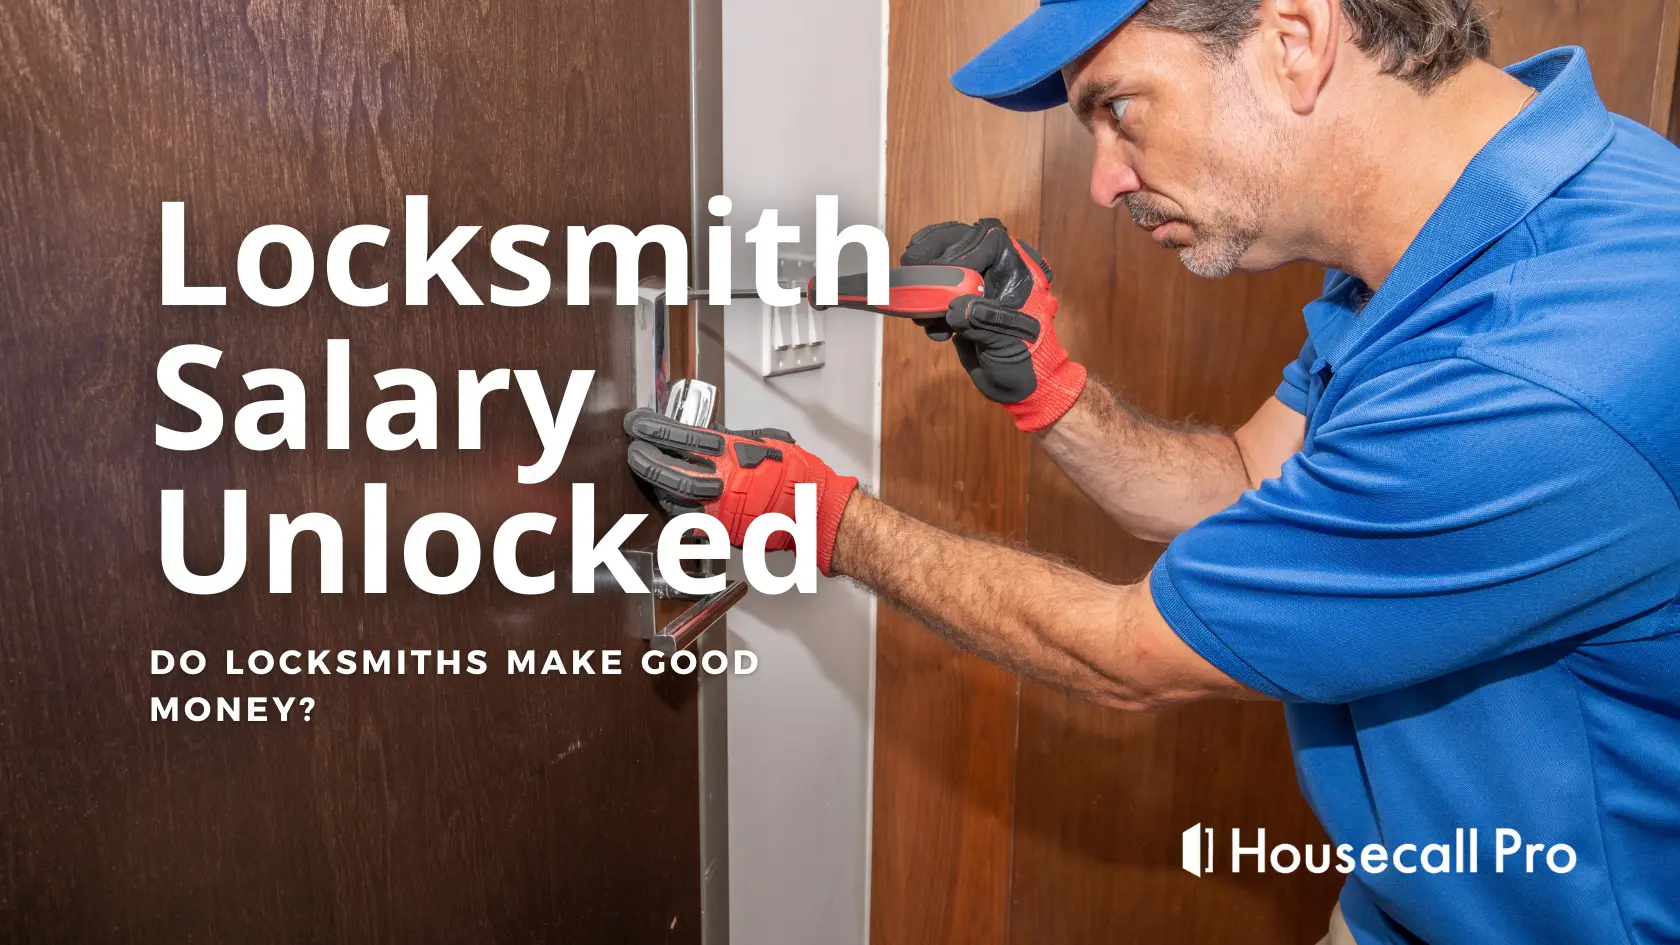 Locksmith Salary blog post banner